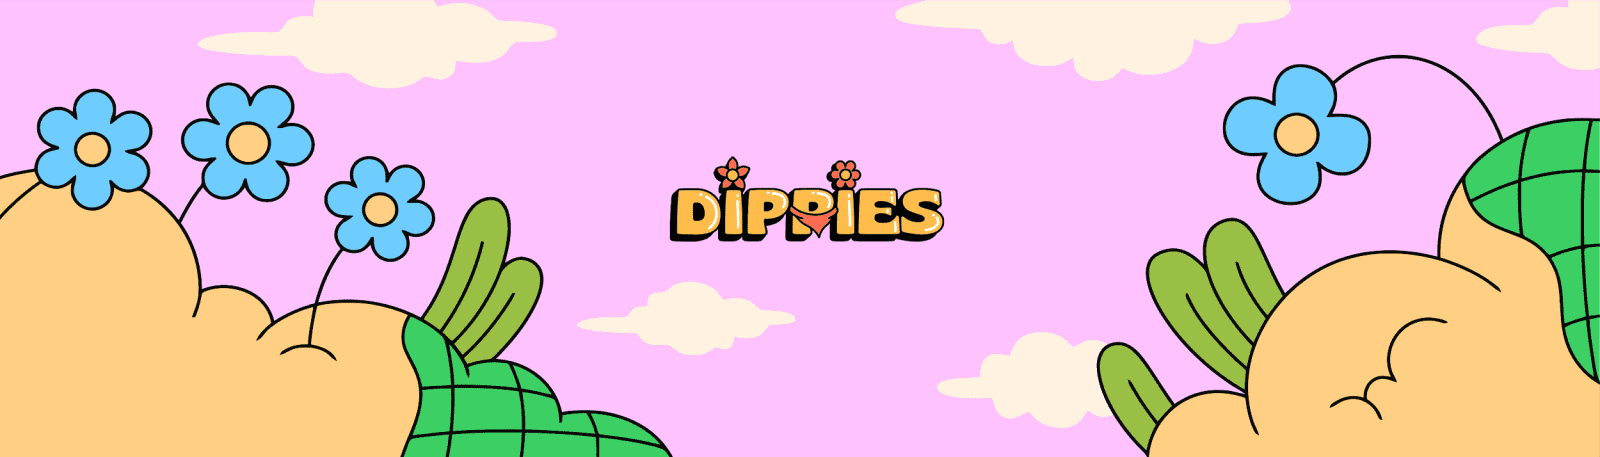 Dippies